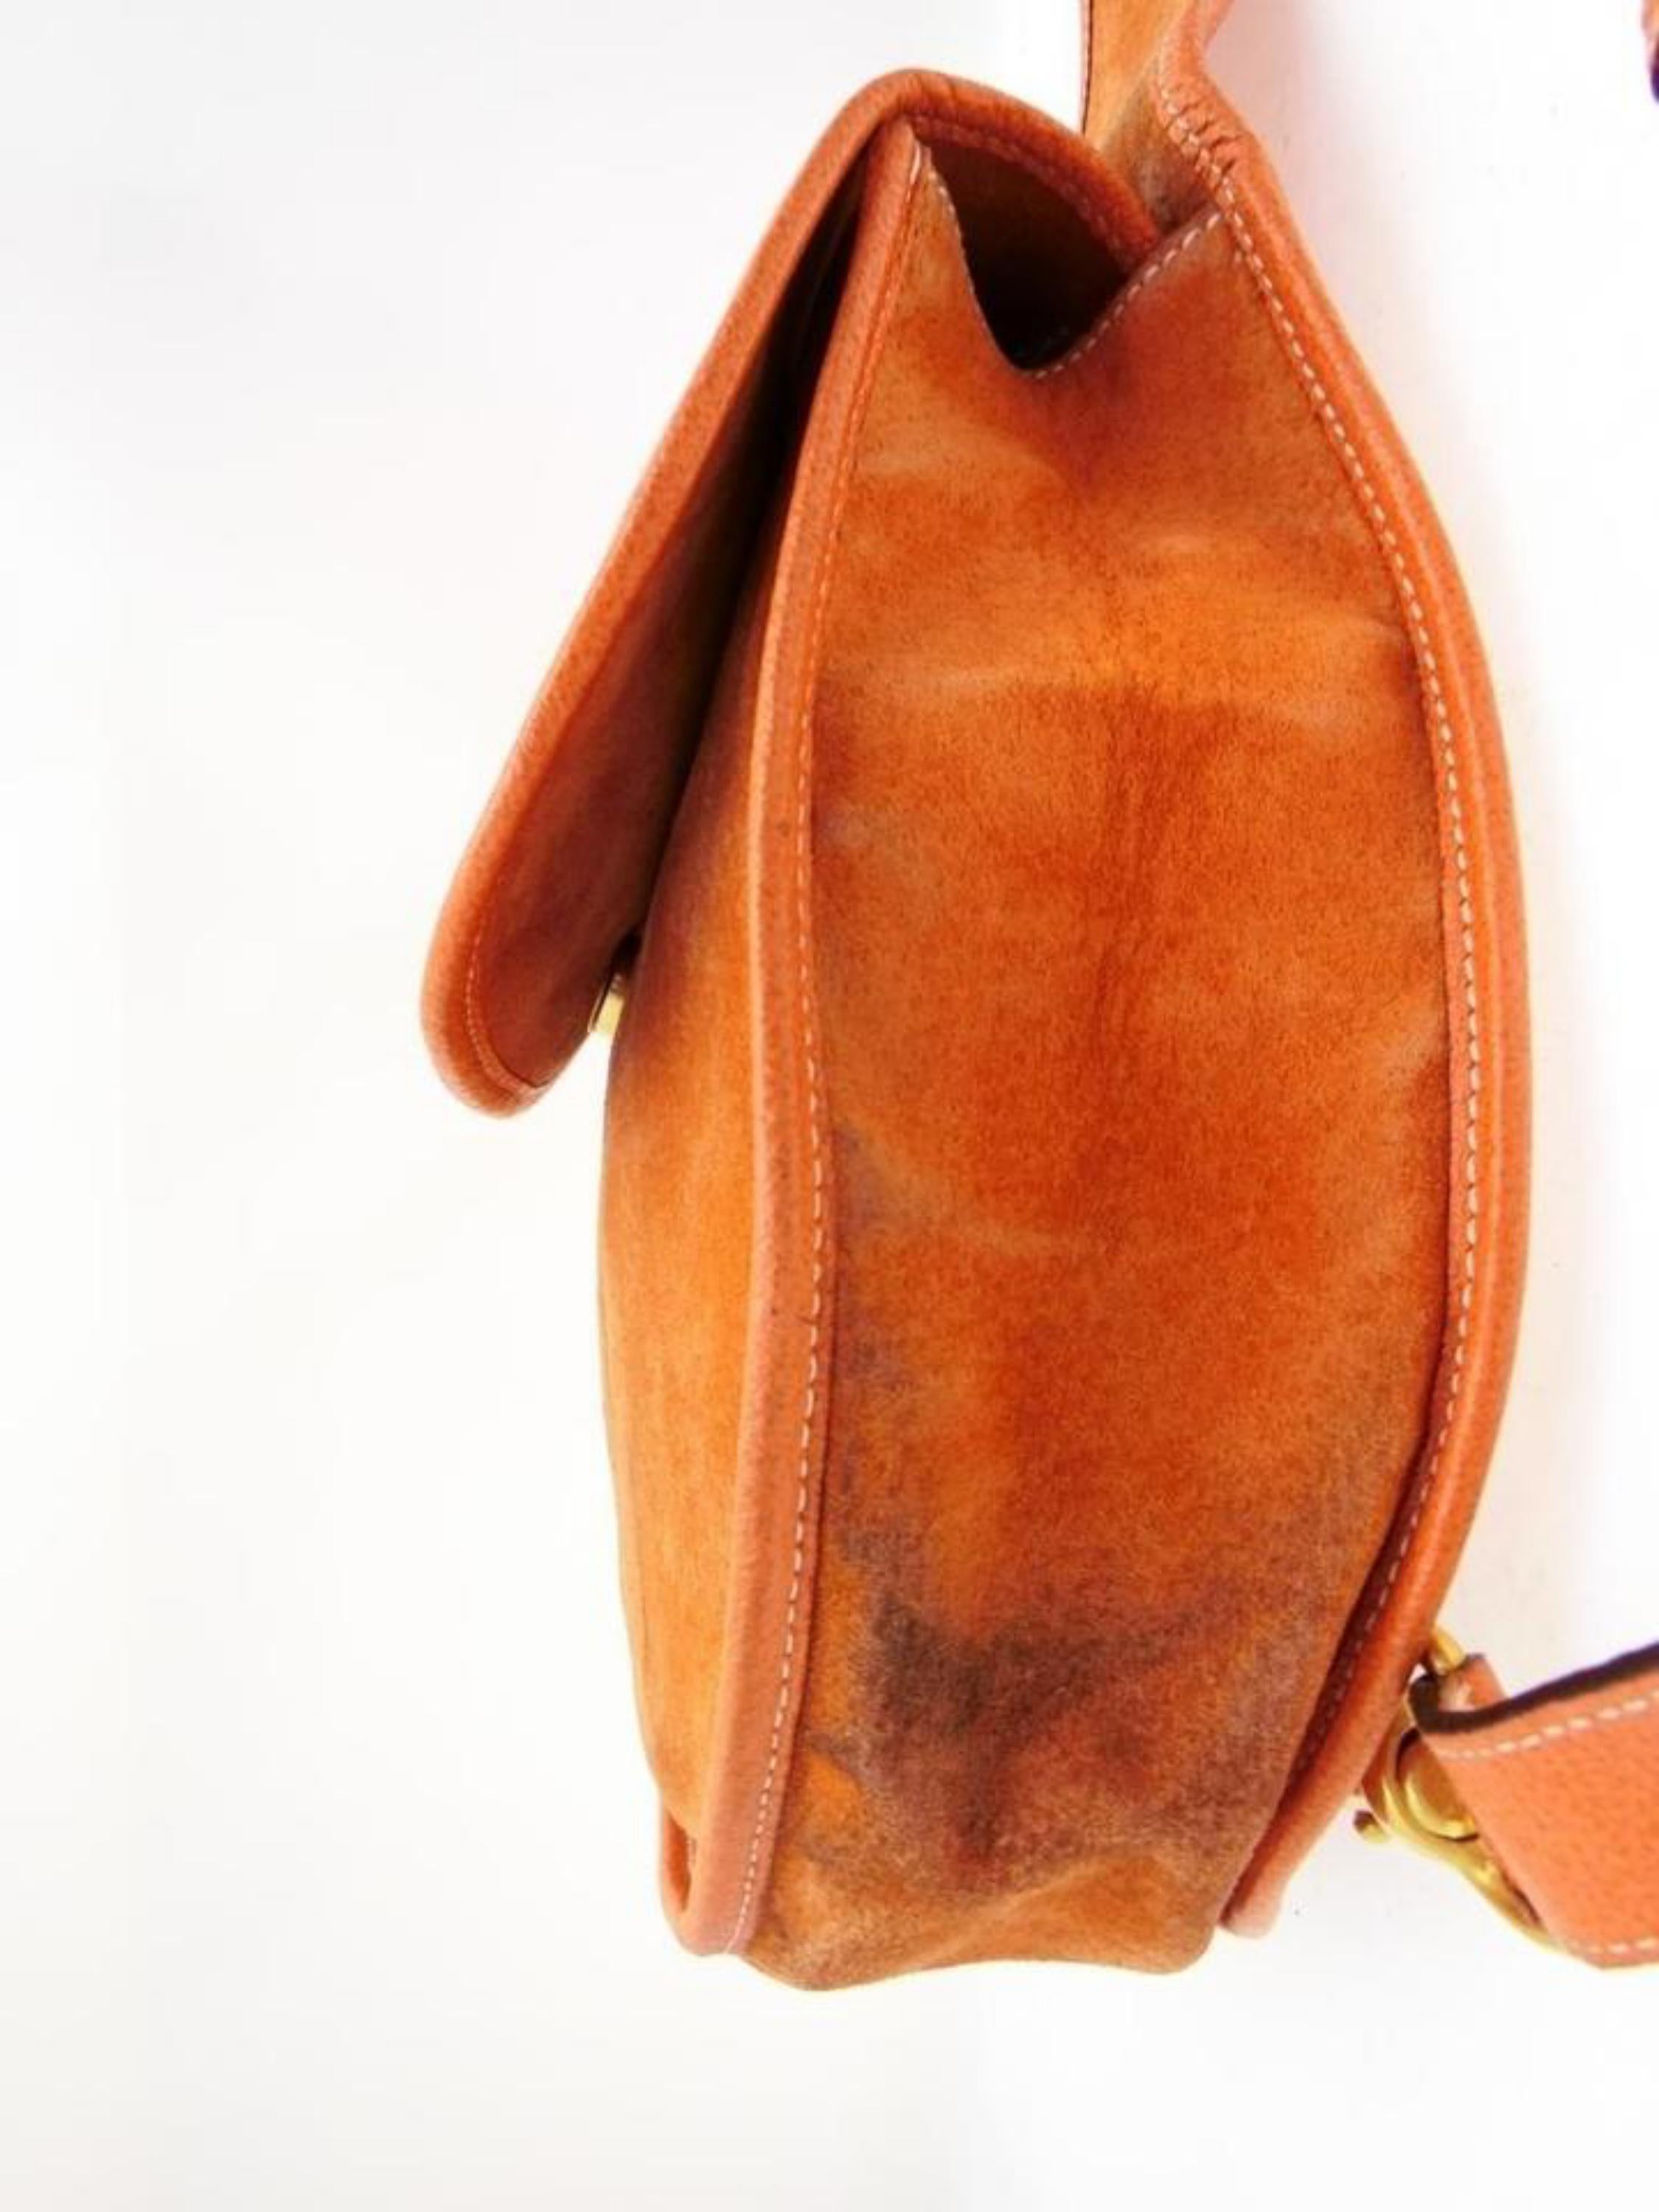 Women's Gucci Horsebit Burnt Body 228677 Orange Suede Leather Shoulder Bag For Sale